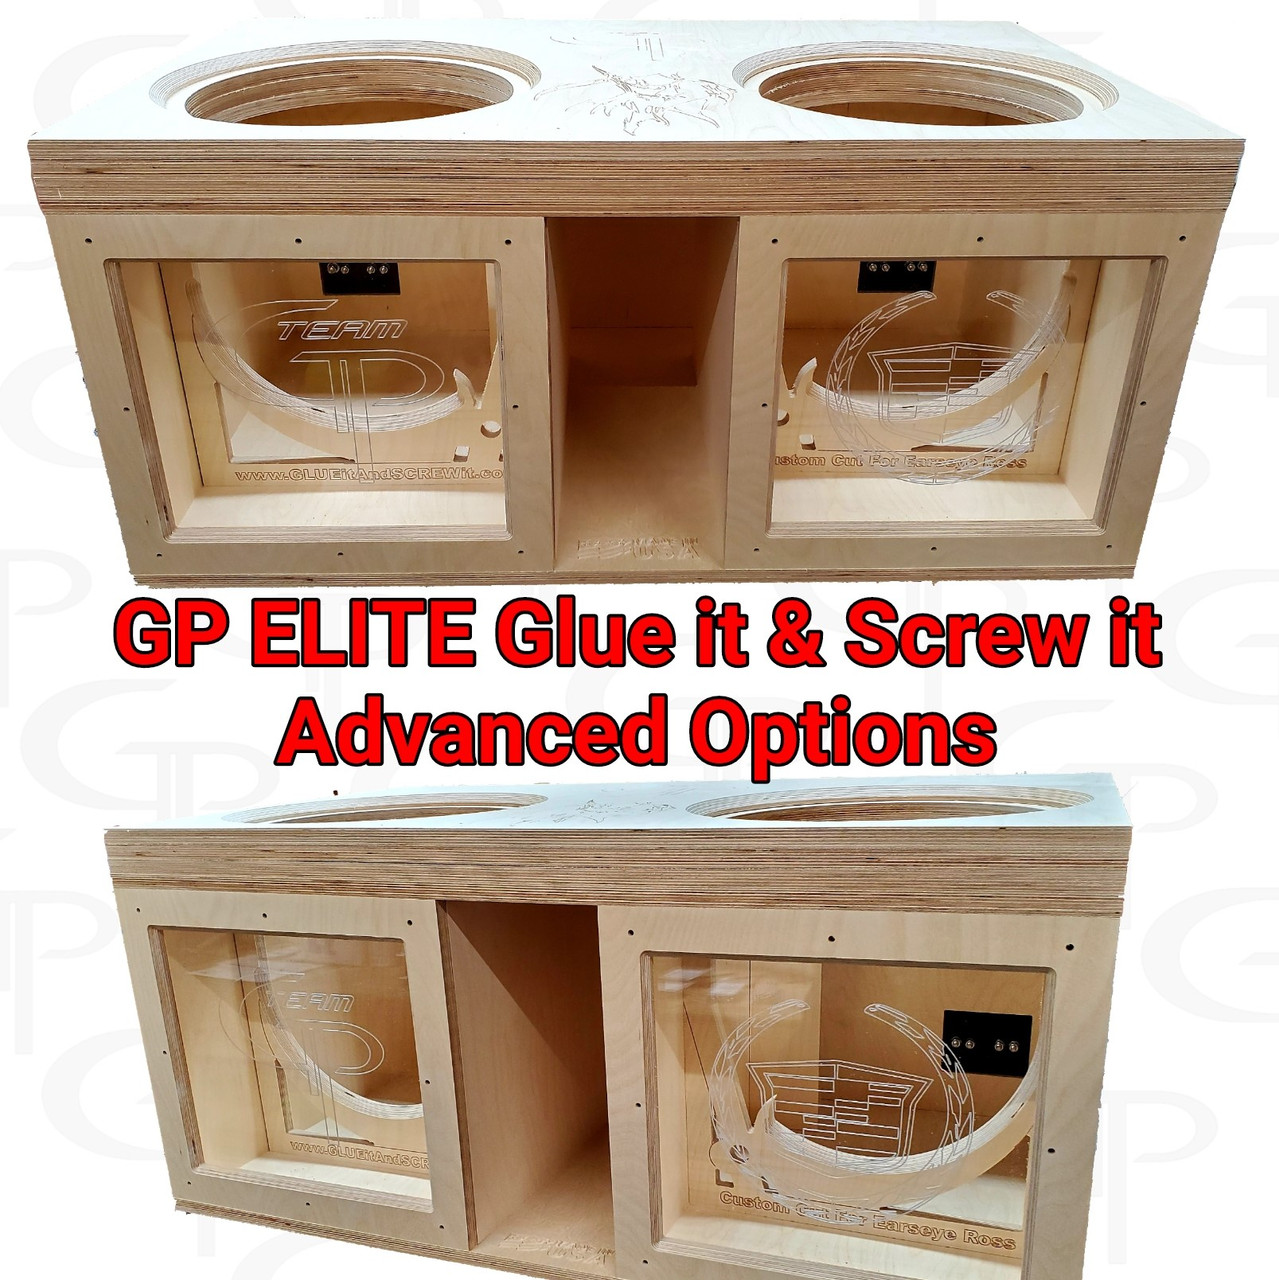 GP ELITE Dual 6.5" Compact High Performance Glue it & Screw It Sub Enclosure 